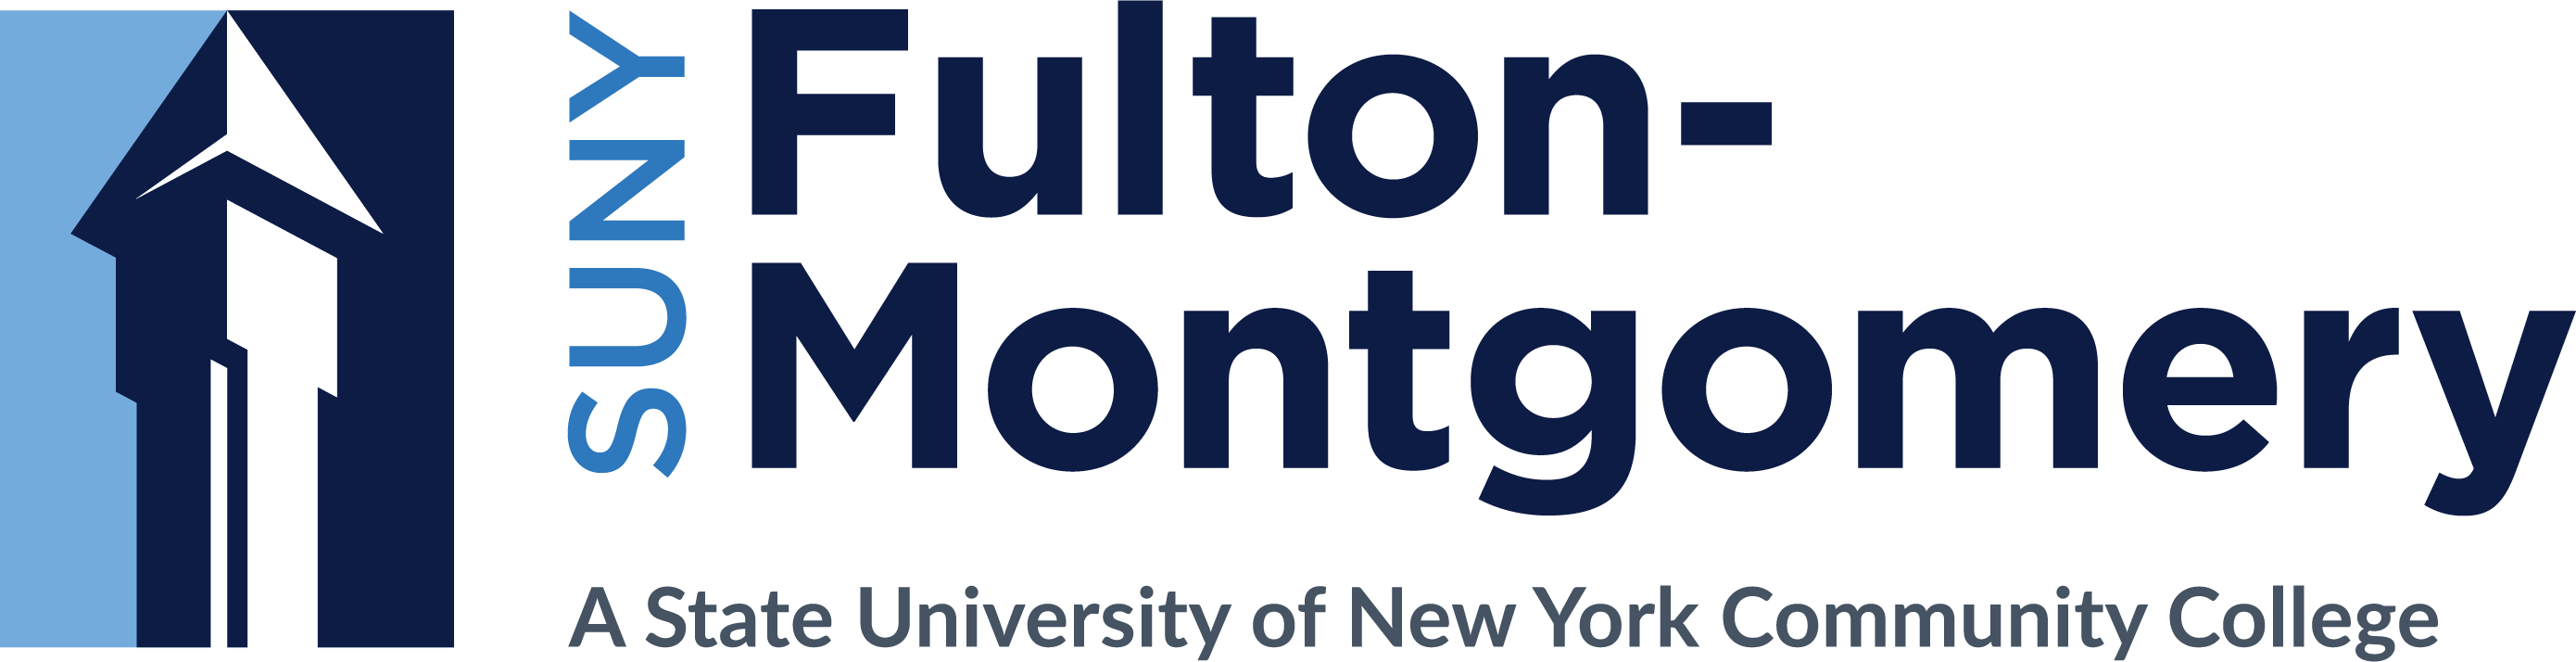 SUNY Fulton-Montgomergy A State University of New York Community college